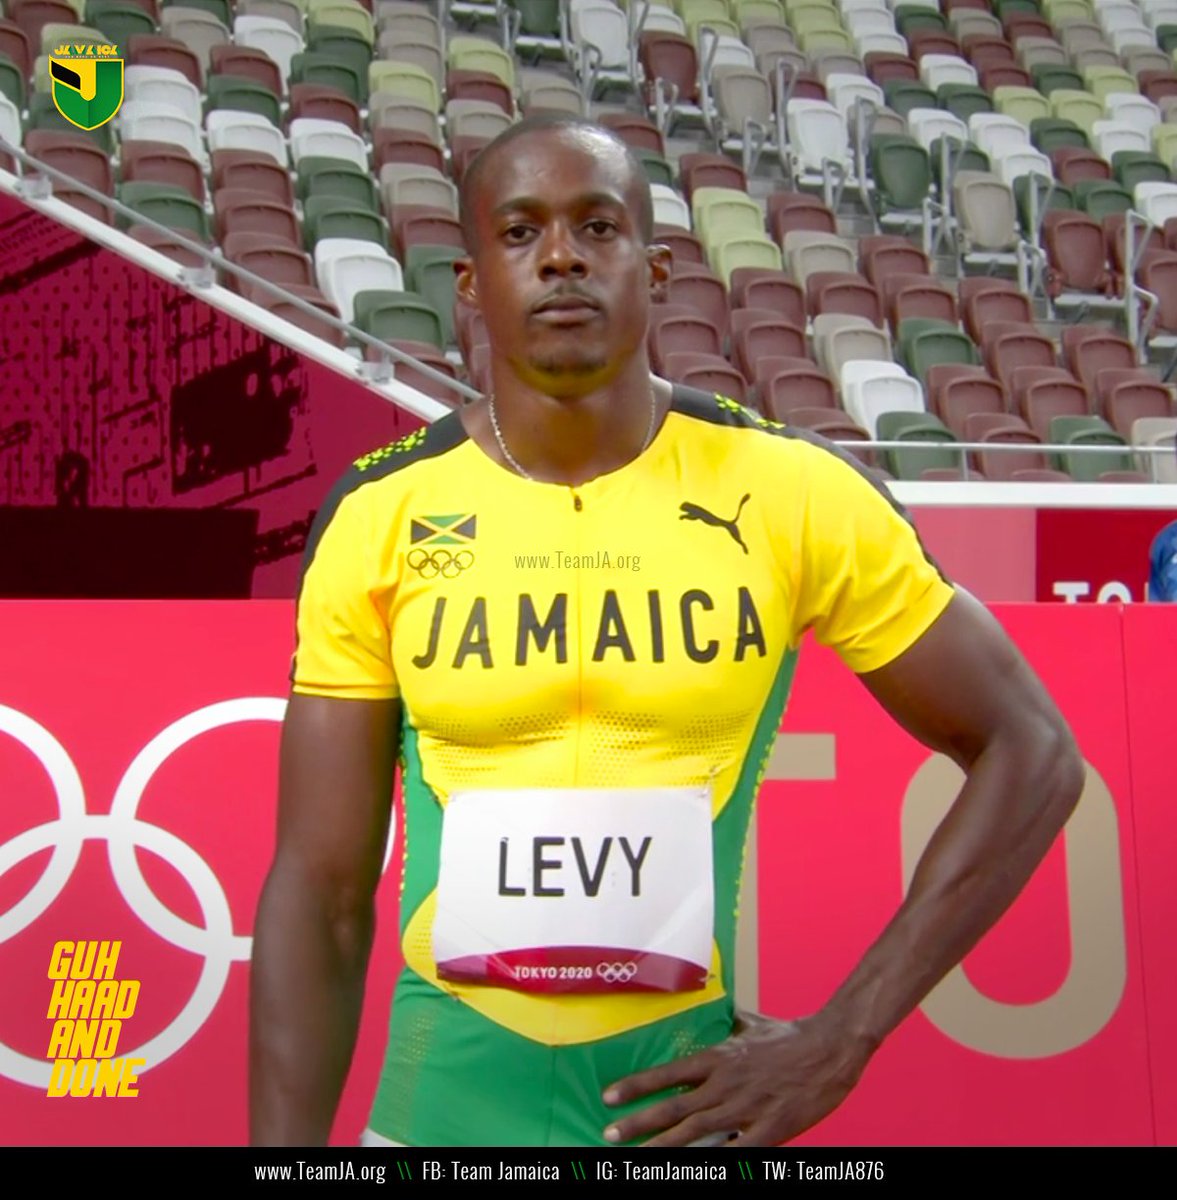 Team Jamaica on Twitter: "Ronald Levy WINS Heat 1 of the Hurdles in 13.17. 🔥🔥🔥 #TeamJamaica #GuhHaadAndDone https://t.co/onXw7RznMp" /